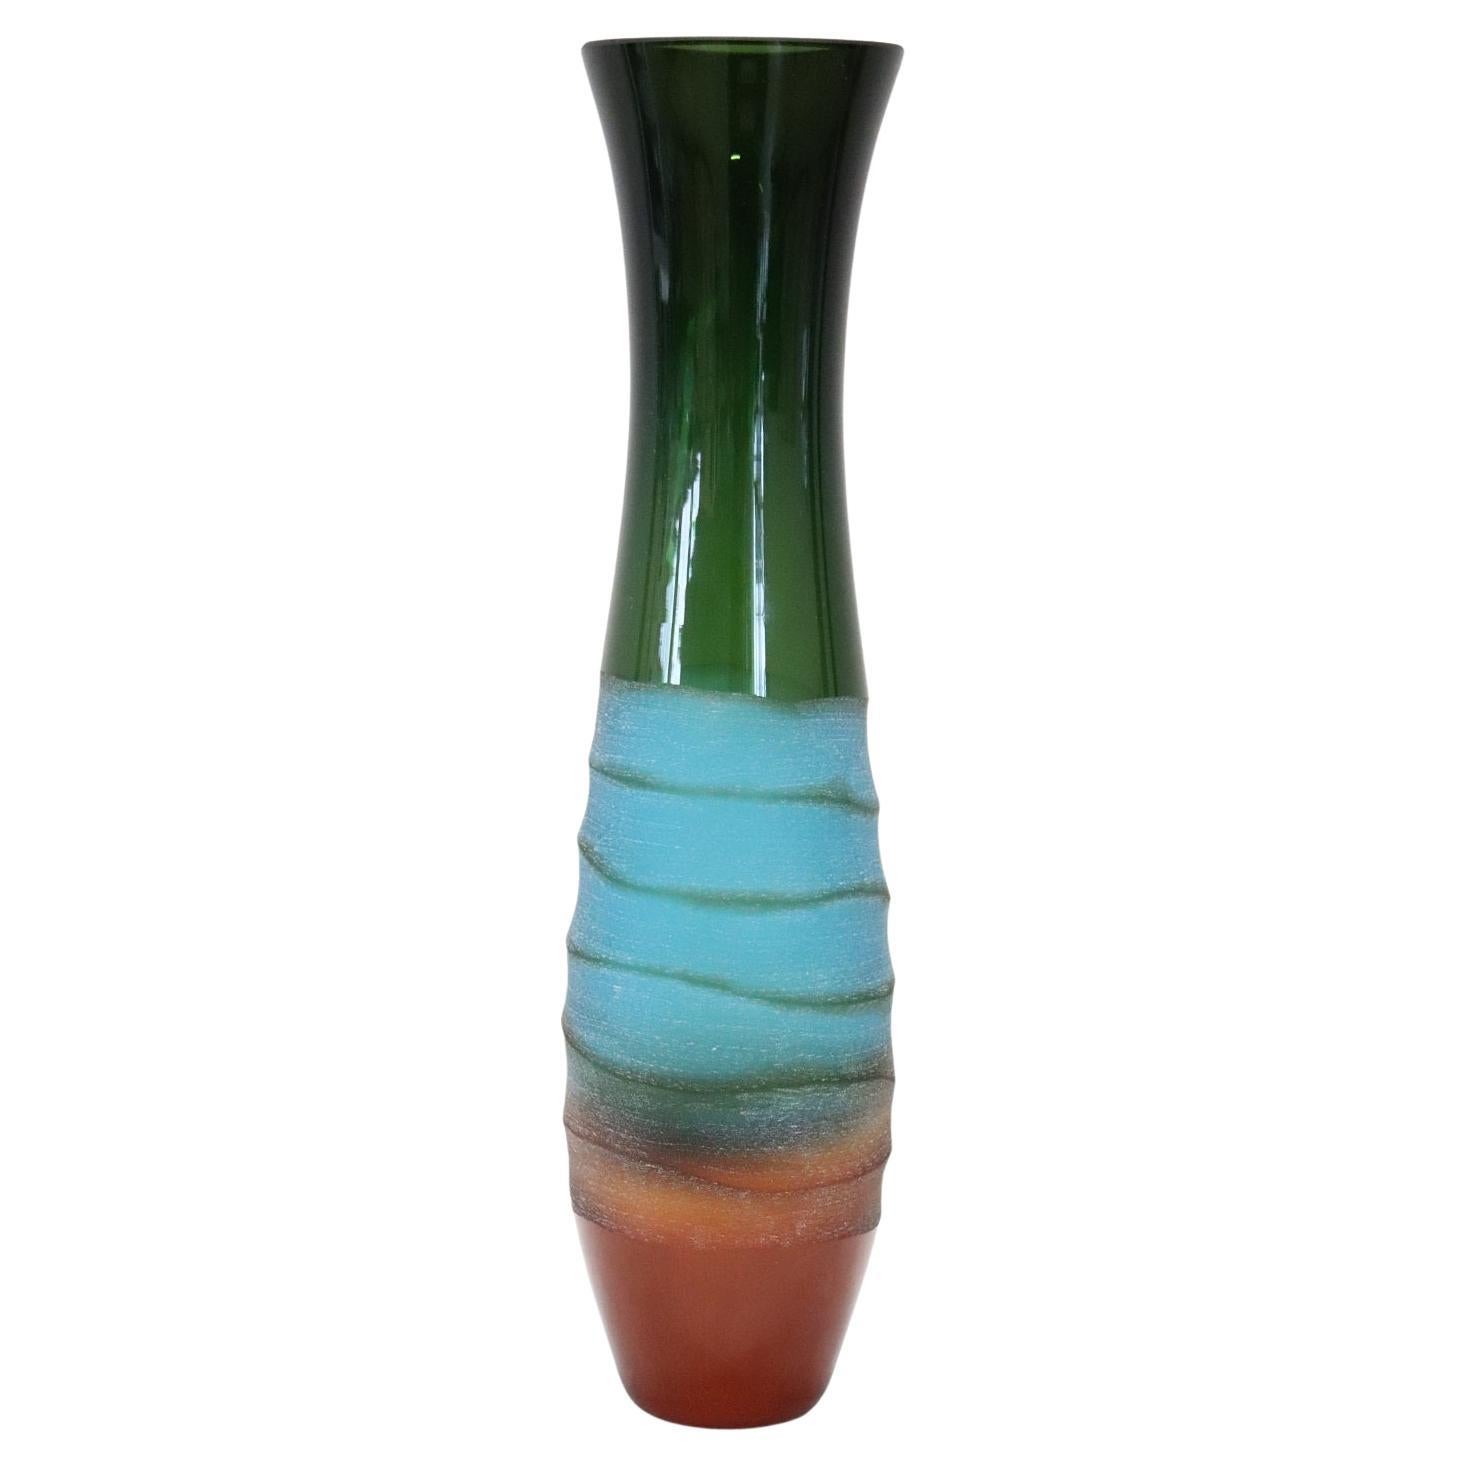 Mehrfarbige Vintage-Kunstglasvase aus Kunstglas von Villeroy & Boch, 1990er Jahre